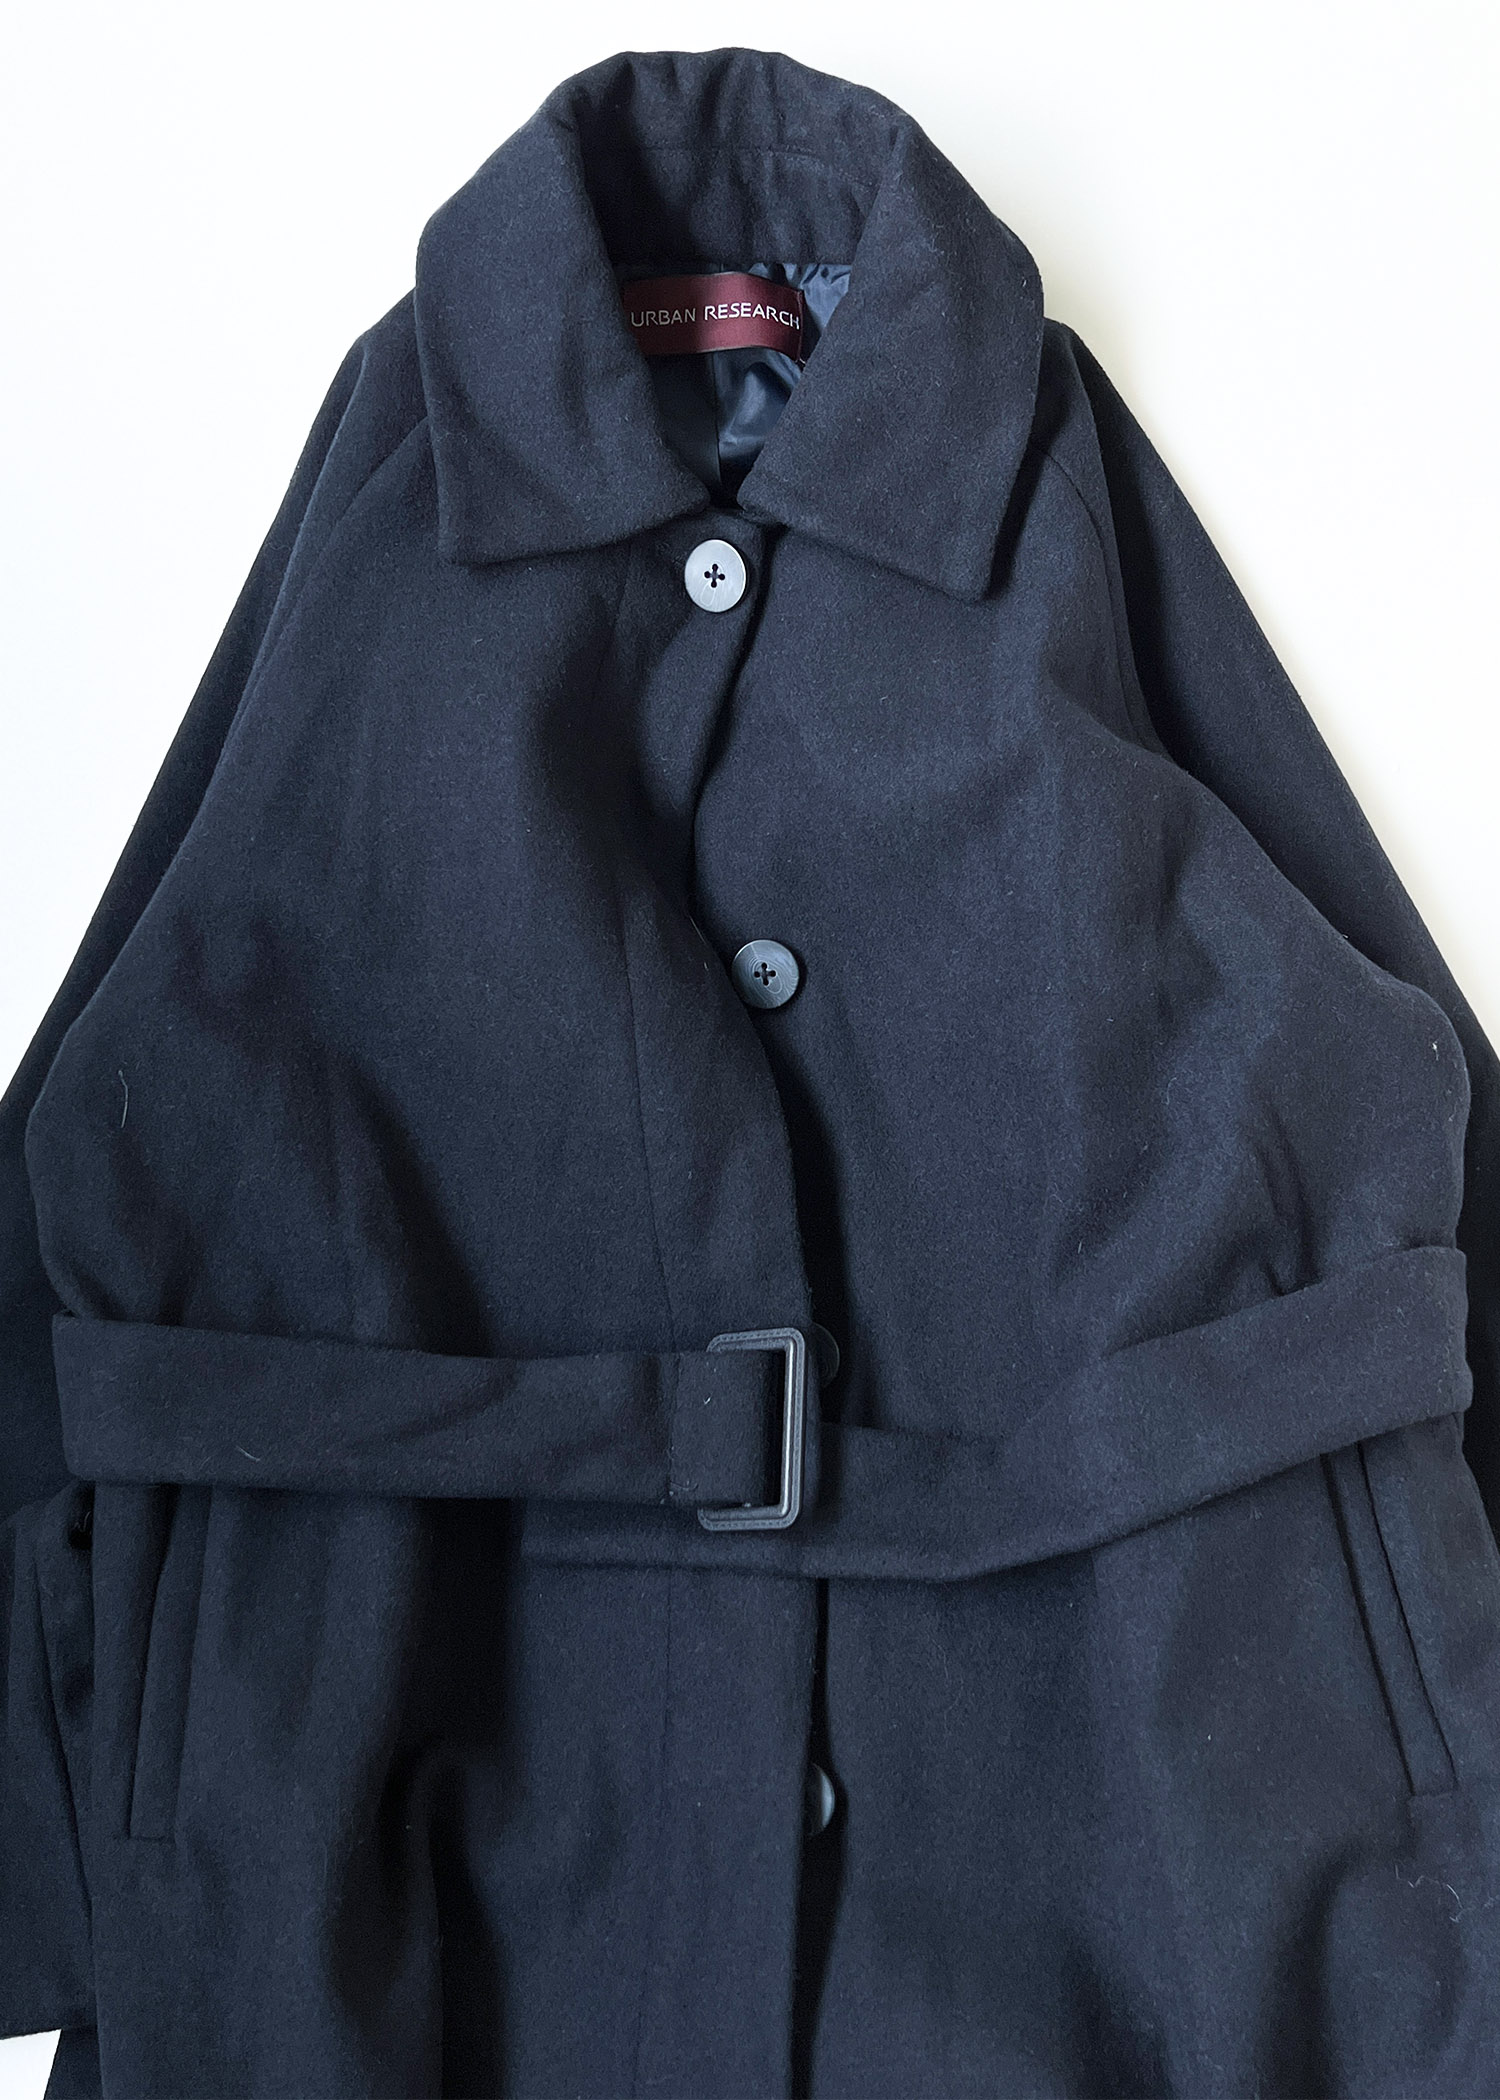 URBAN RESERCH belted coat (unused)